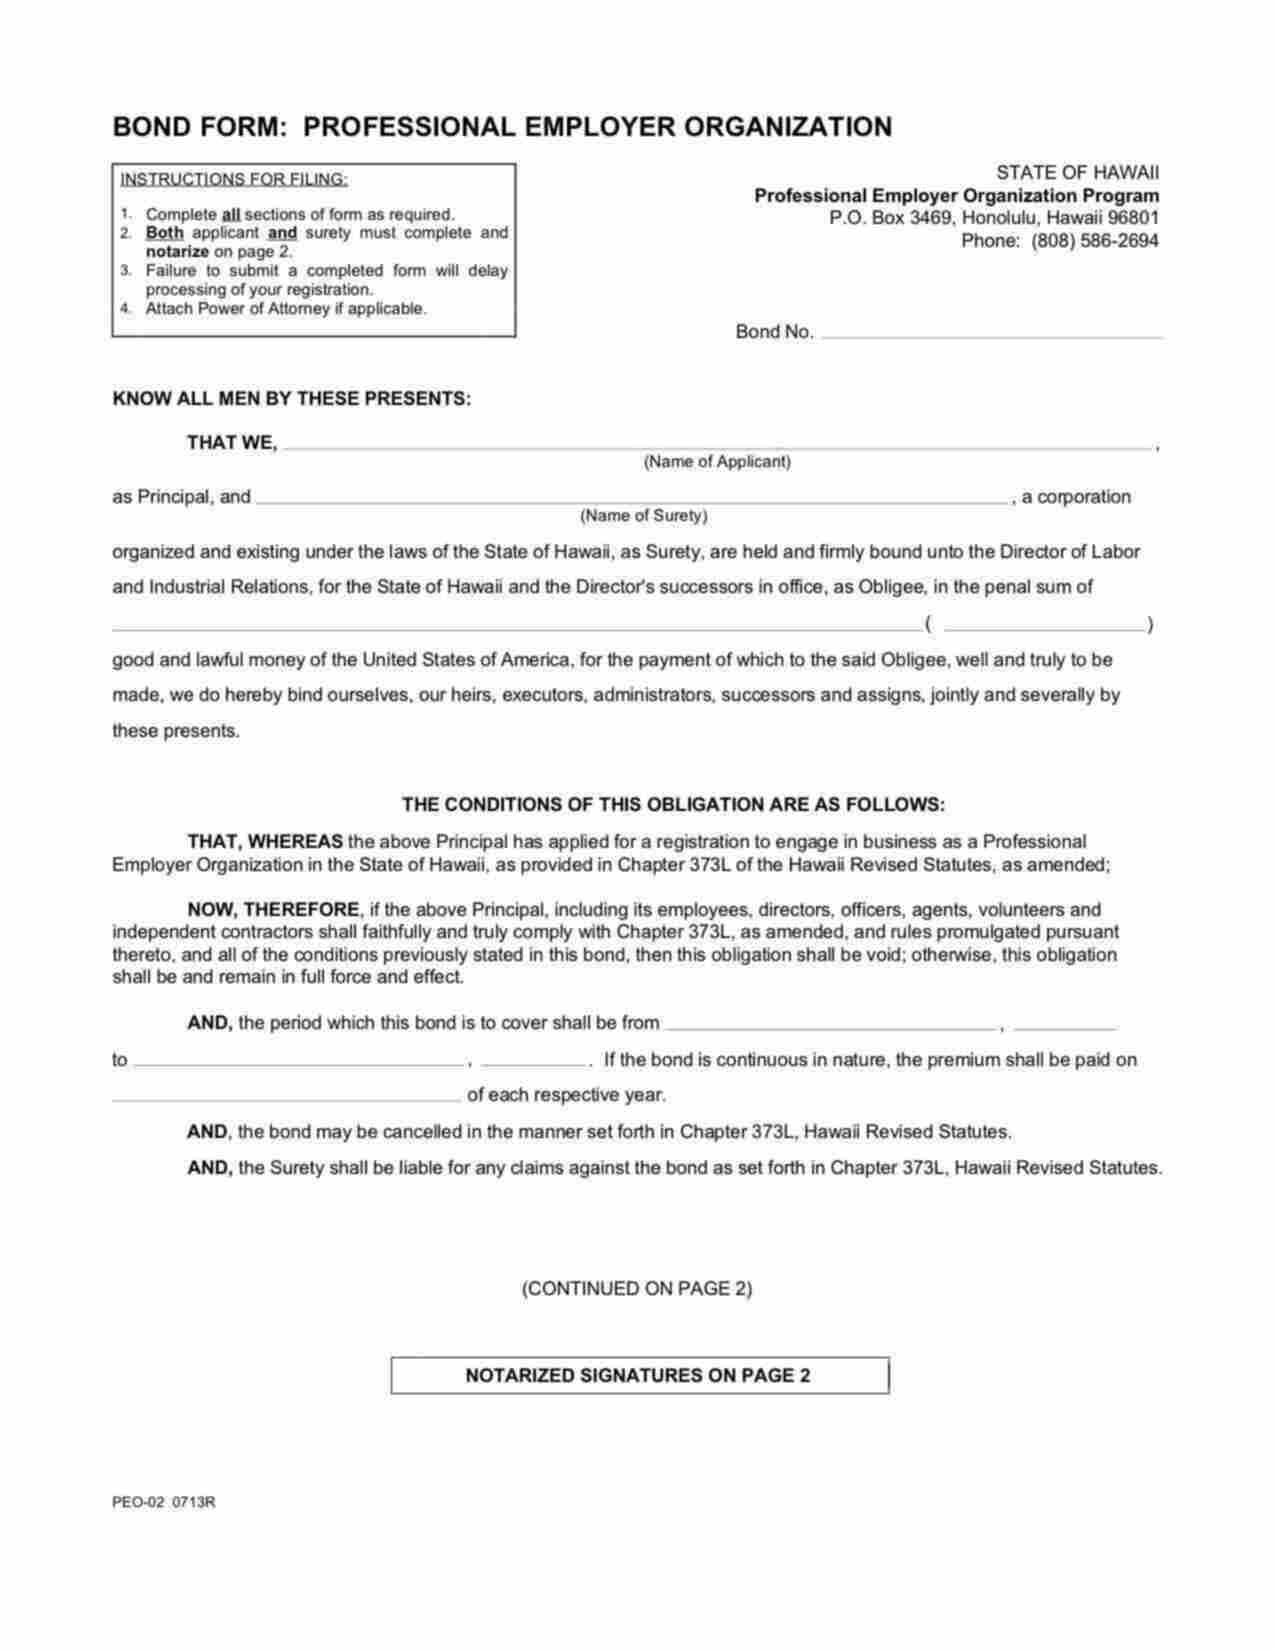 Hawaii Professional Employer Organization Bond Form